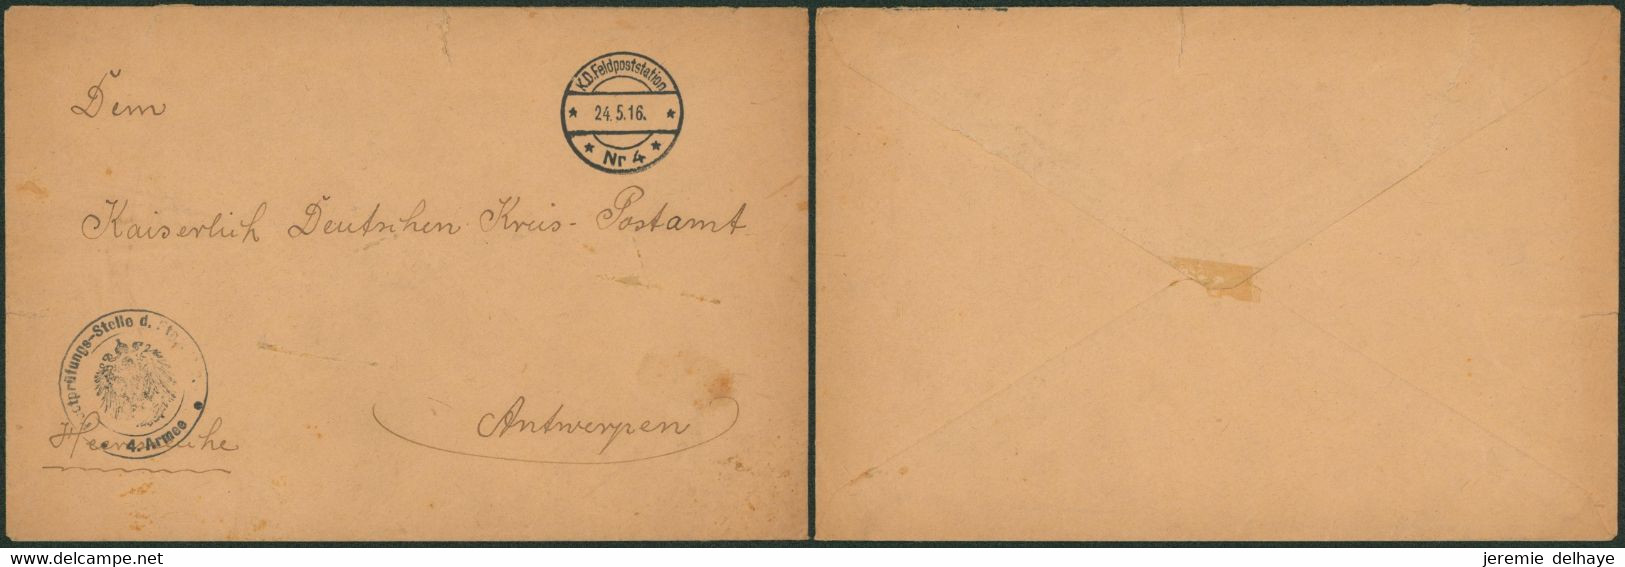 Guerre 14-18 - Feldpostbrief + Cachet Avec Aigle "Postprüfungs-Stelle D. Etappe / 4. Armee" (Nr 4, 1916) > Antwerpen - Armée Allemande